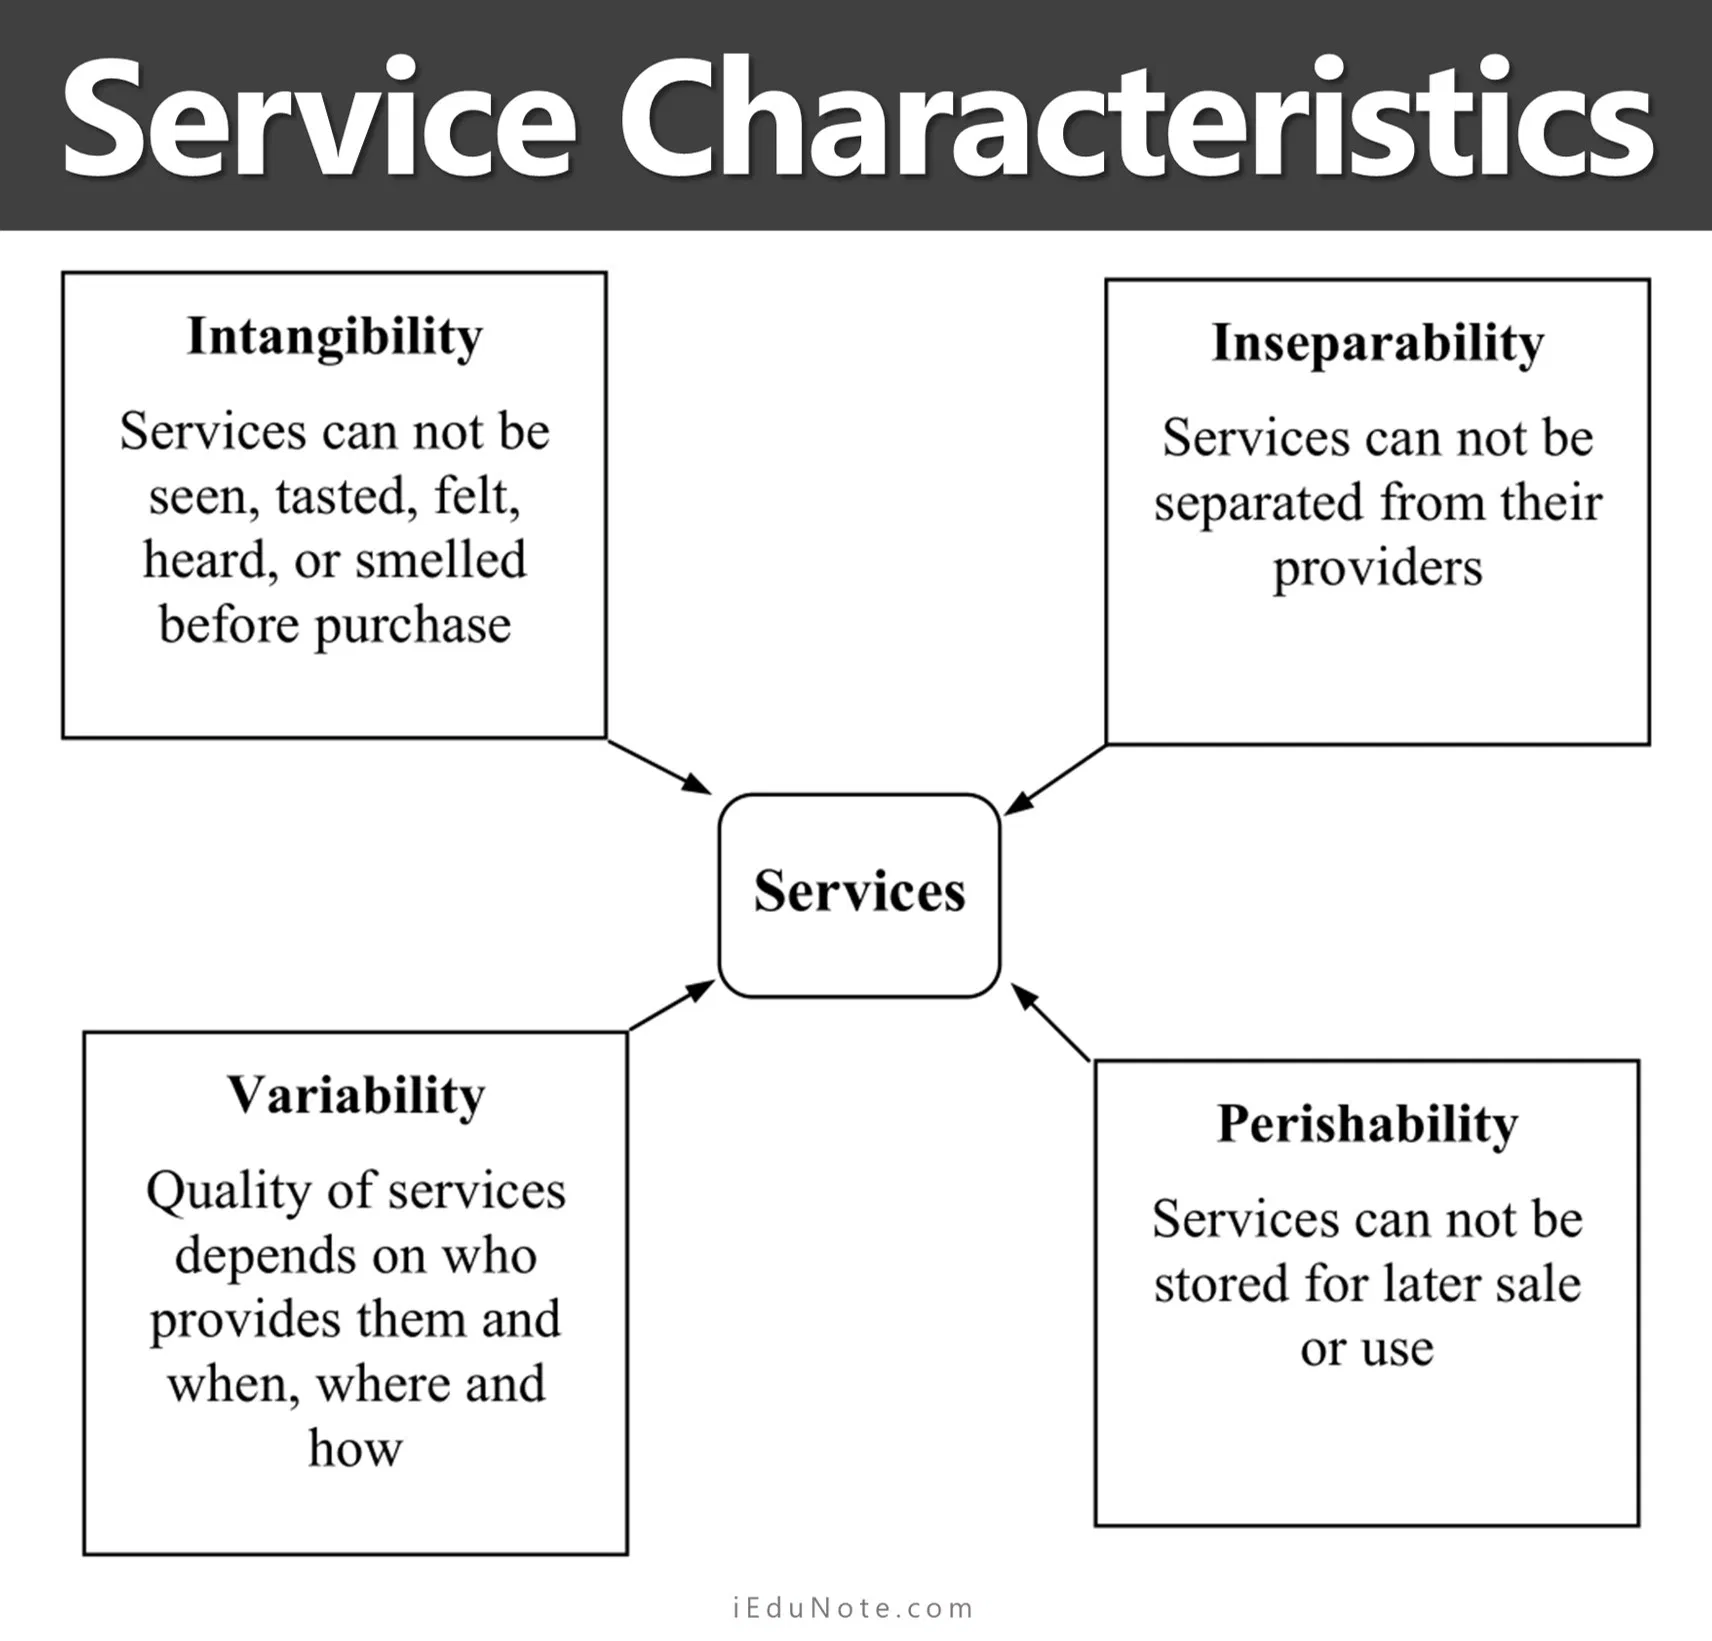 Service Characteristics